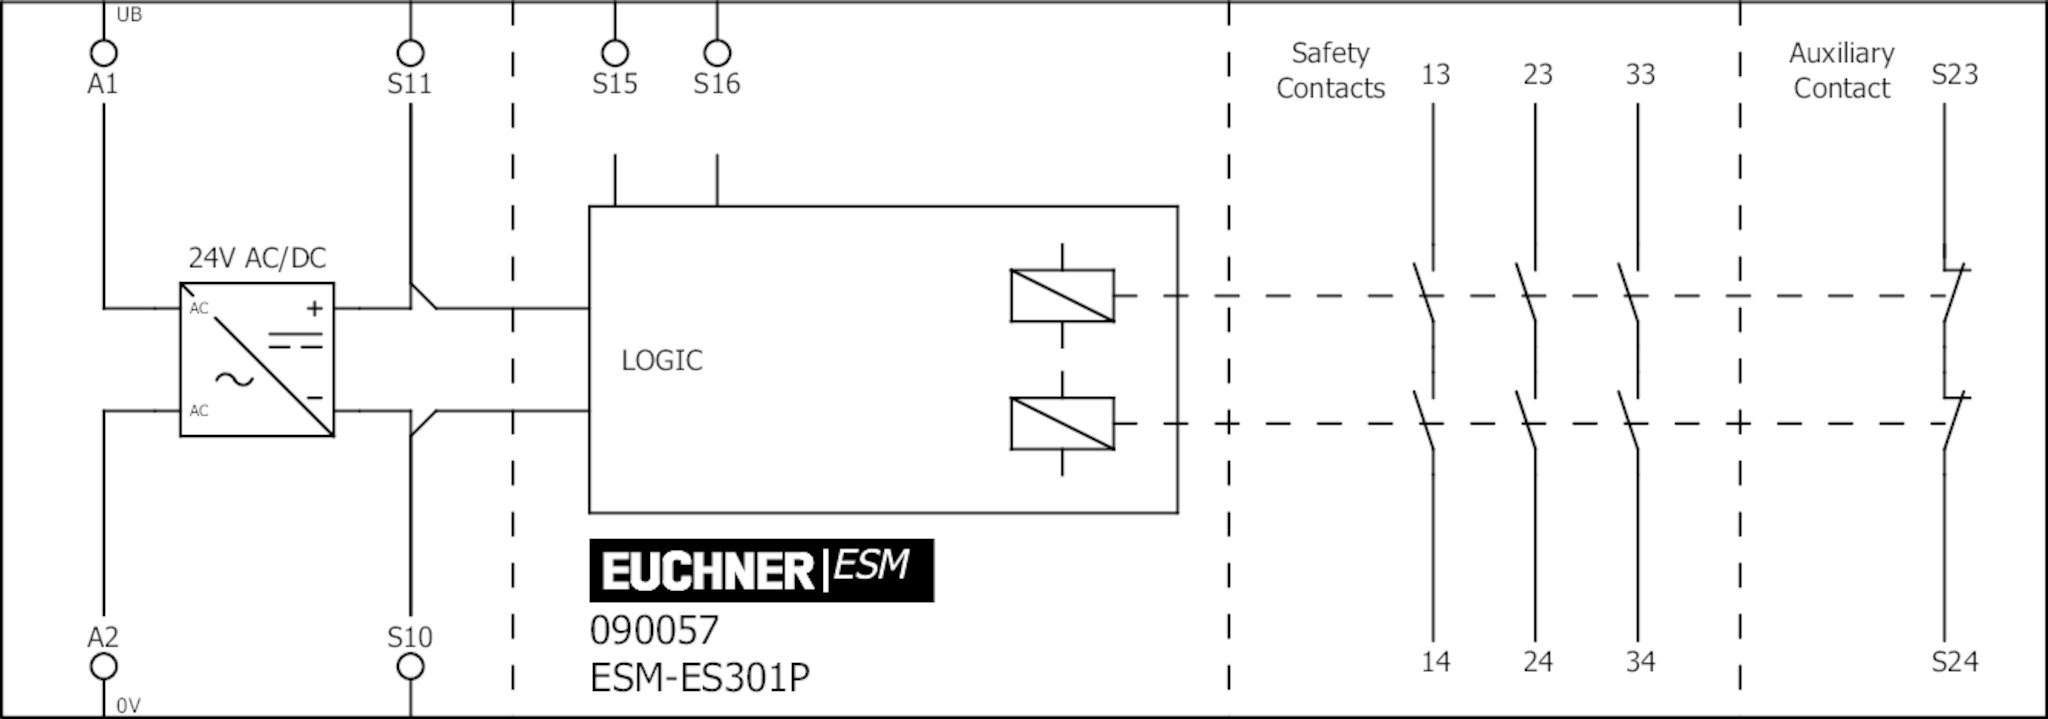 Cat 4 Safety Wiring Diagram